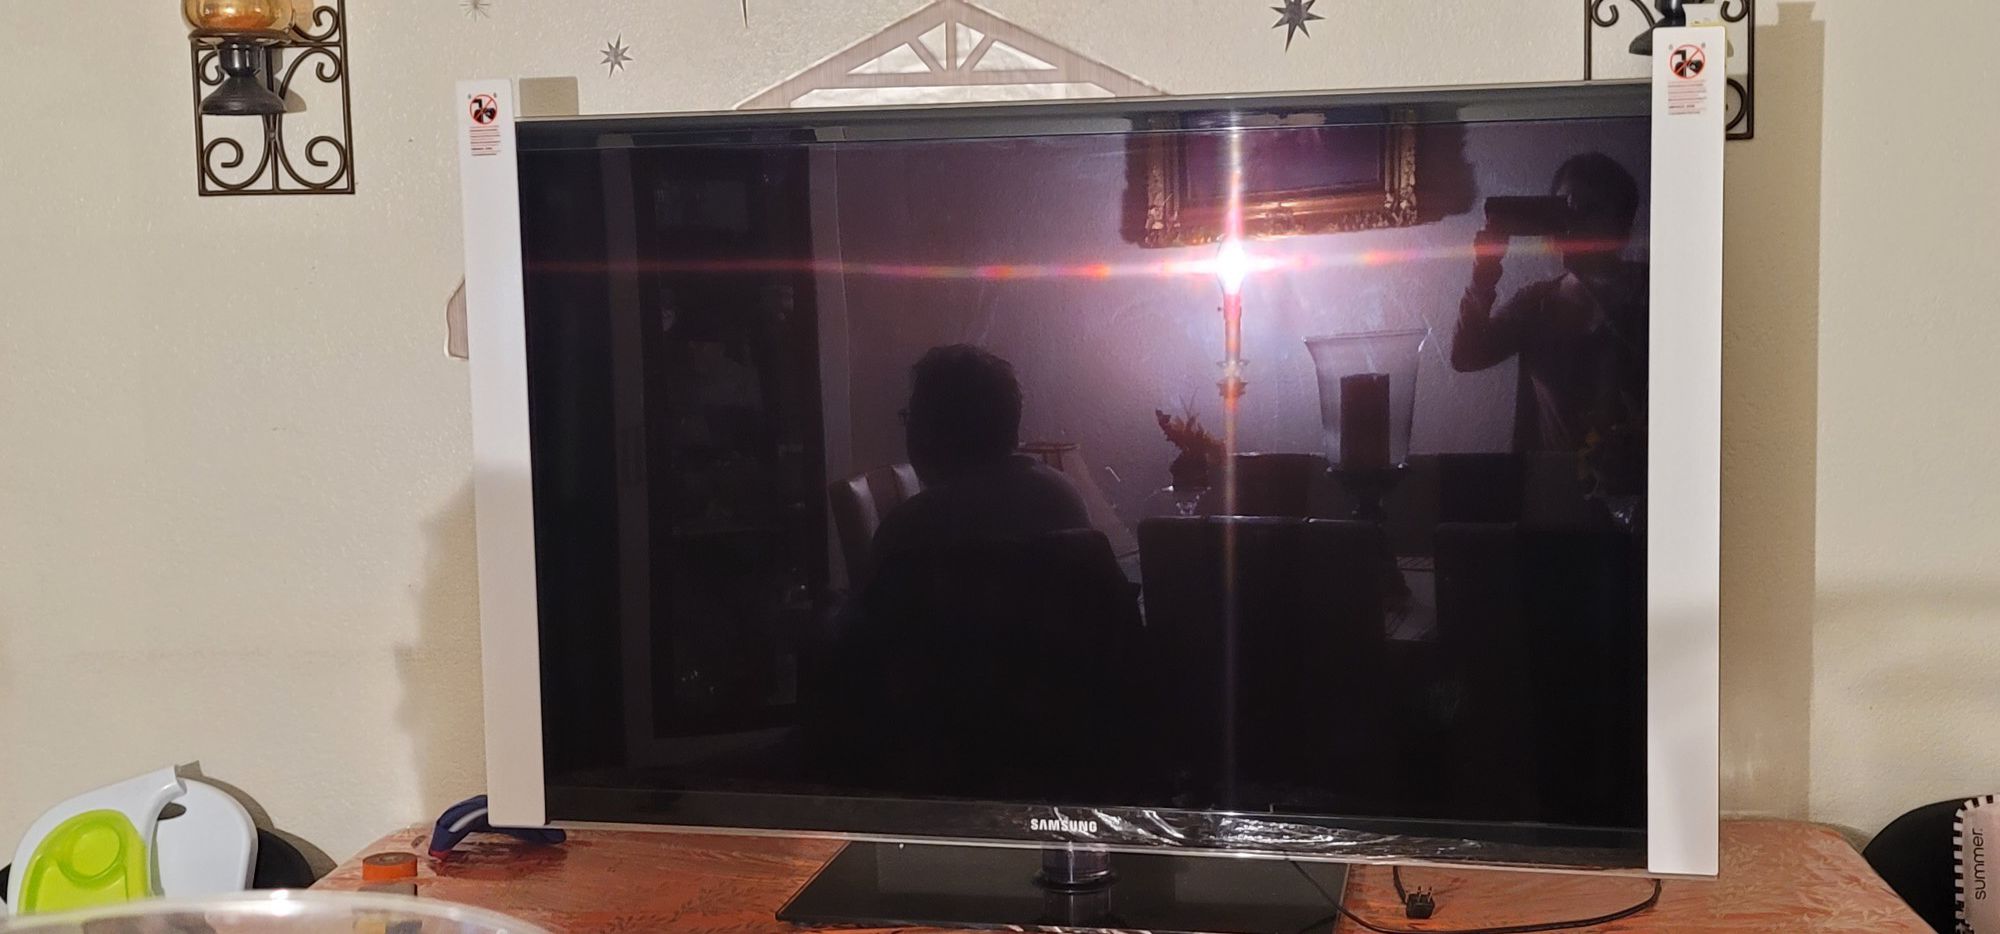 60 inch samsung TV